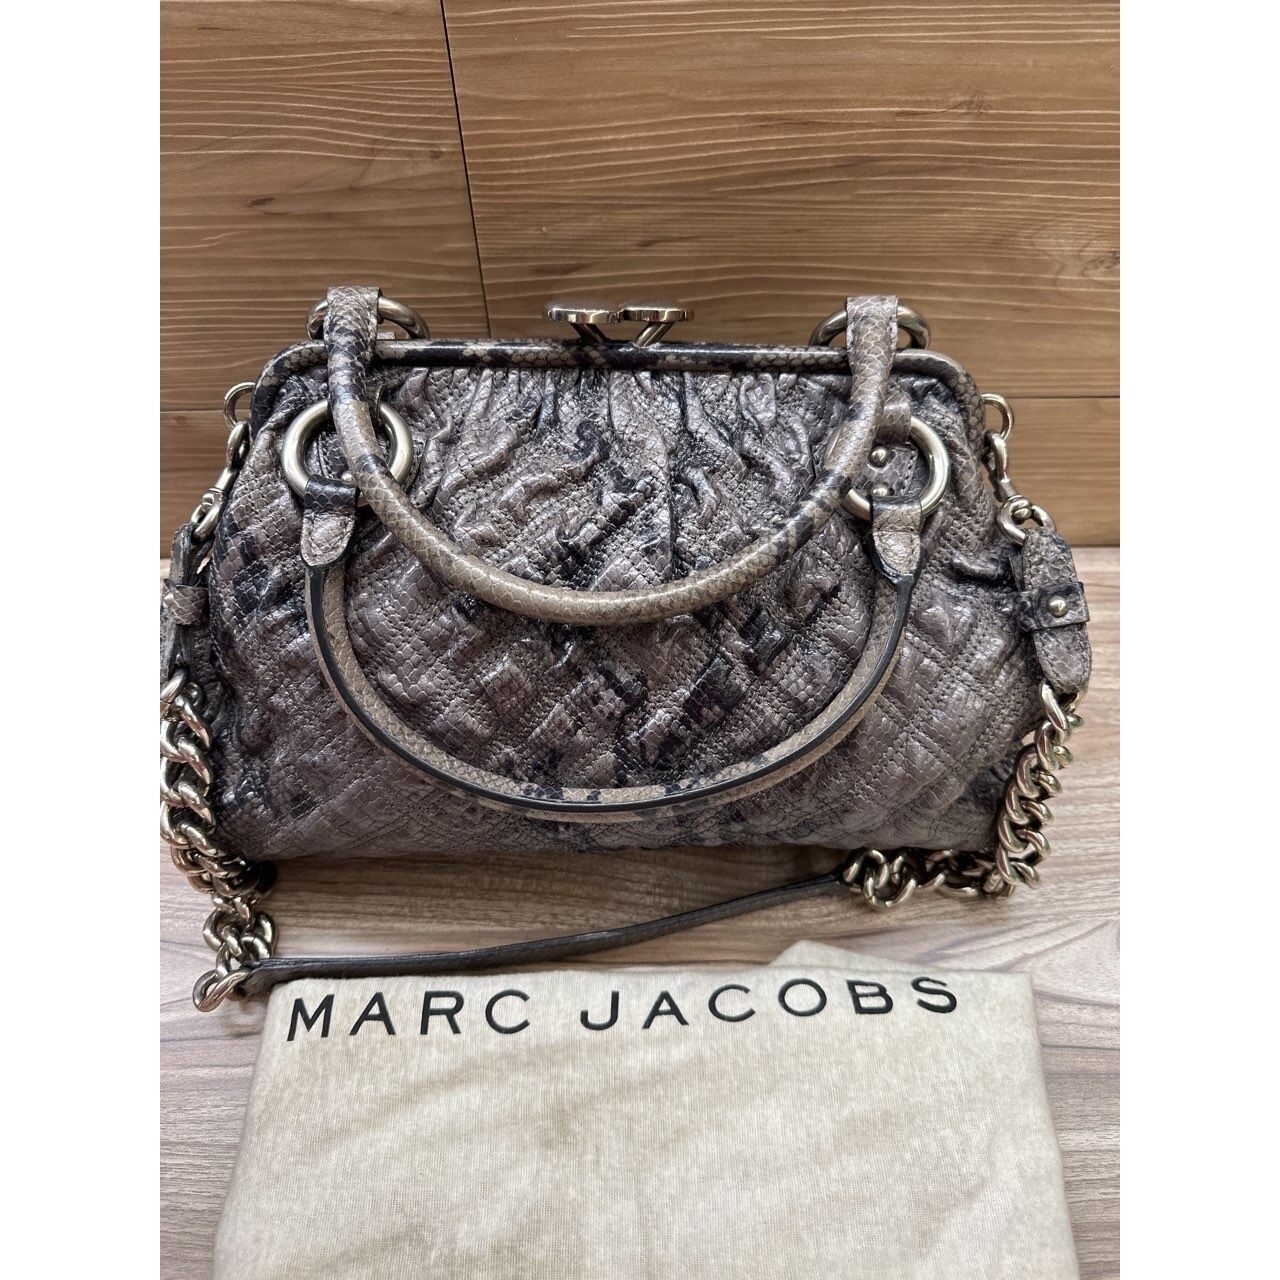 Marc Jacobs Stam Grey Handbag